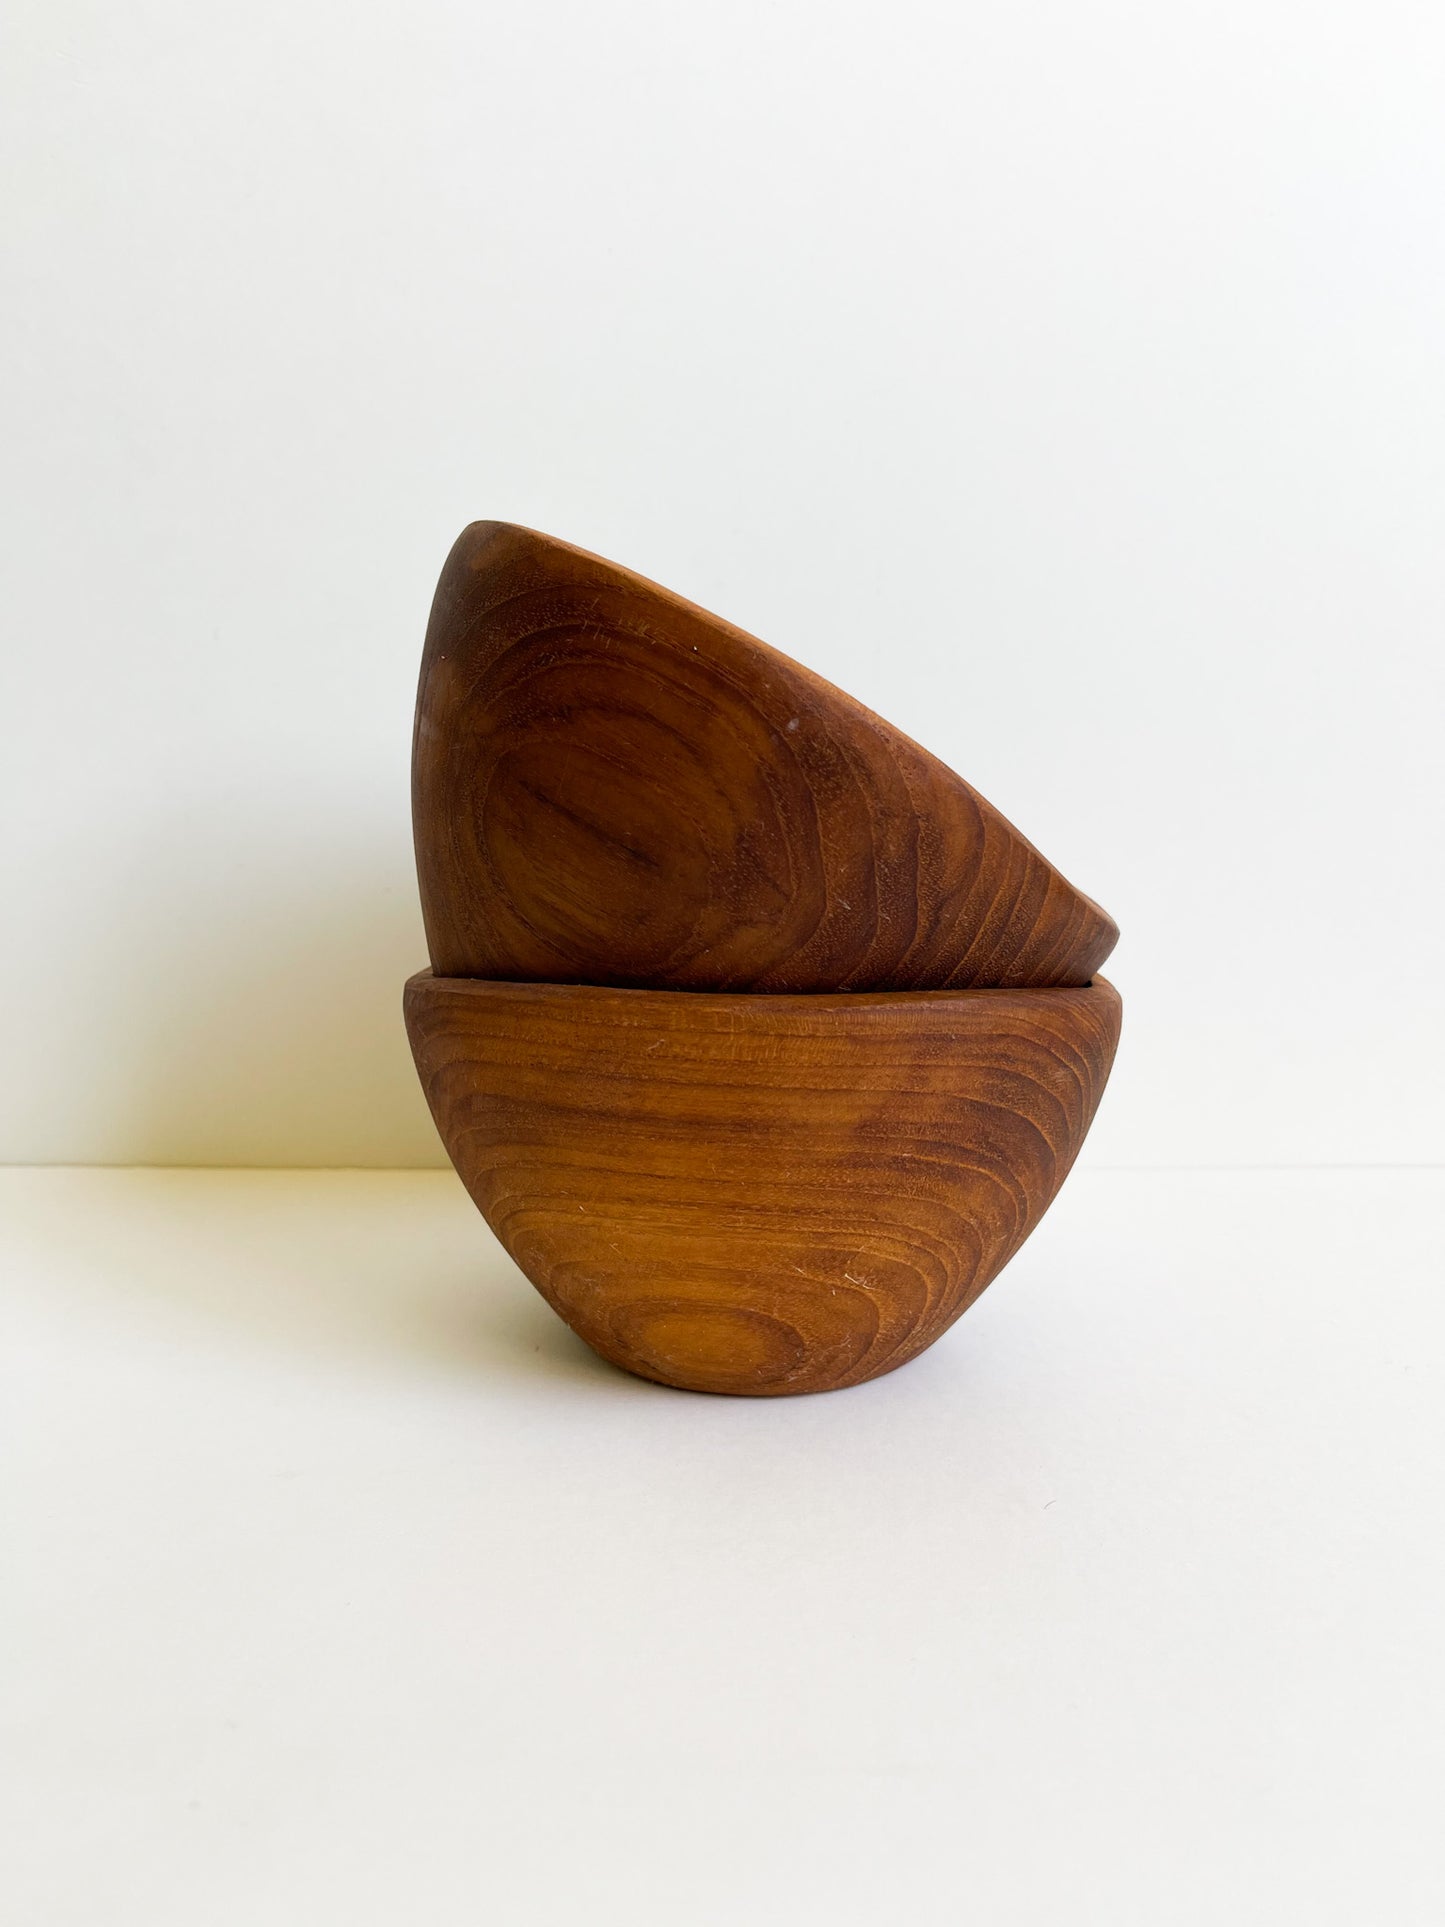 Wooden Bowls Set